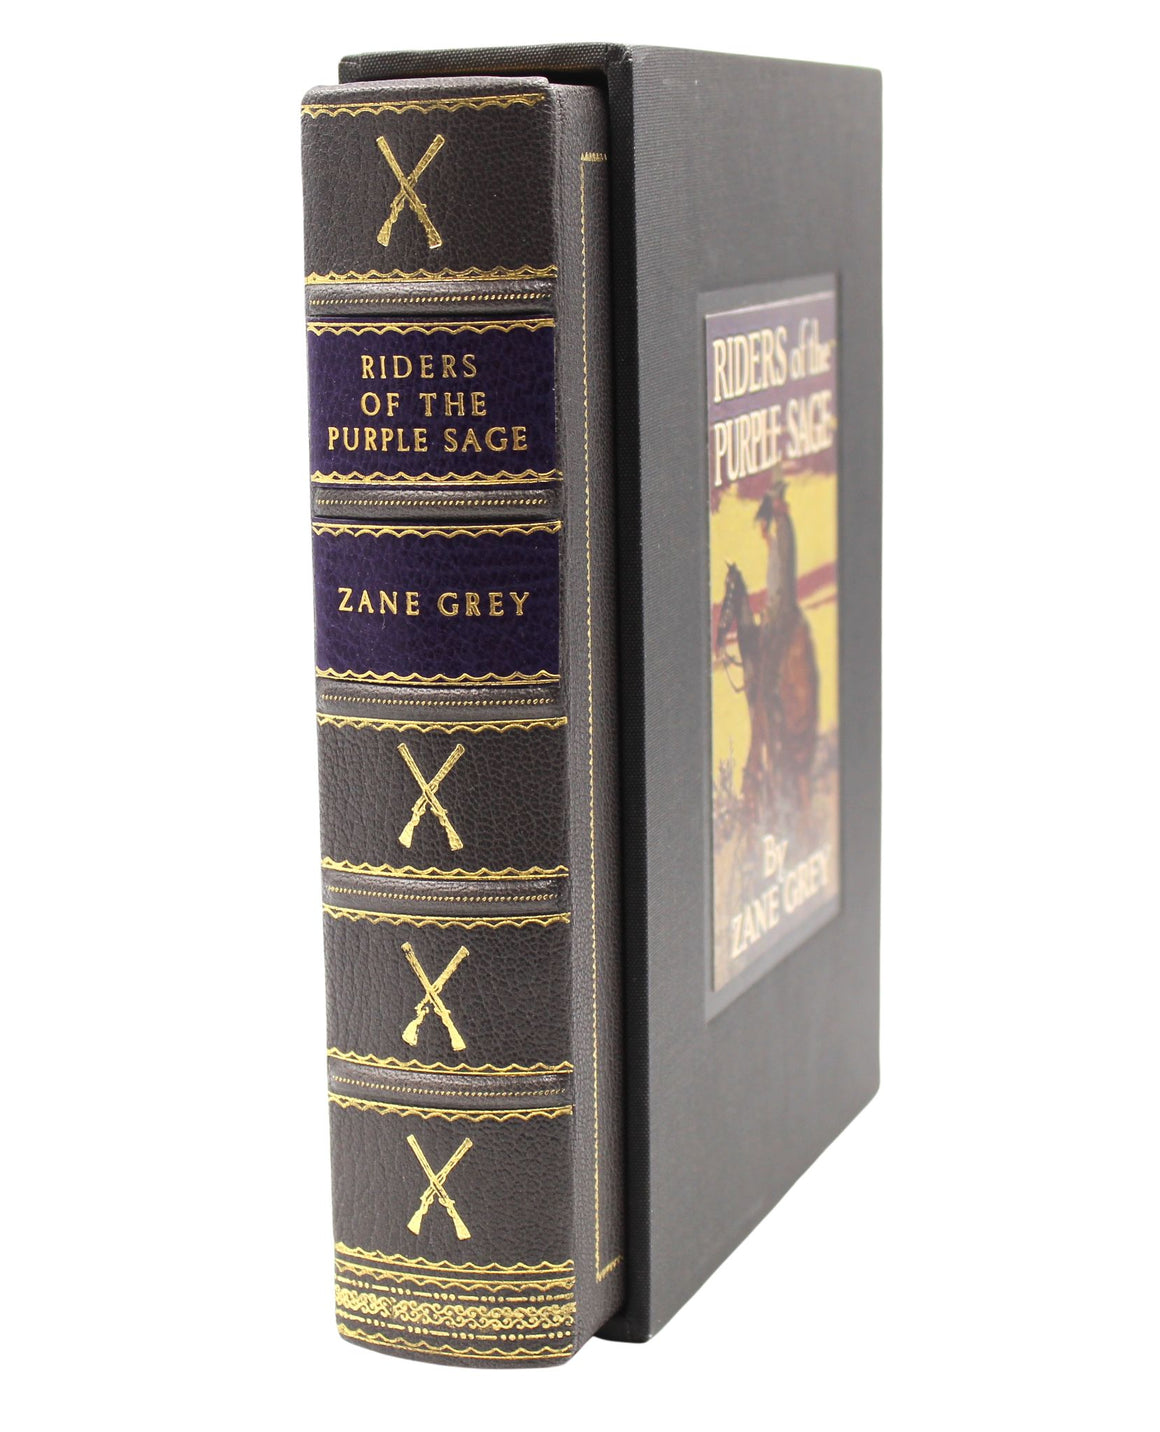 Riders of the Purple Sage by Zane Grey, Grosset & Dunlap Edition, circa 1940